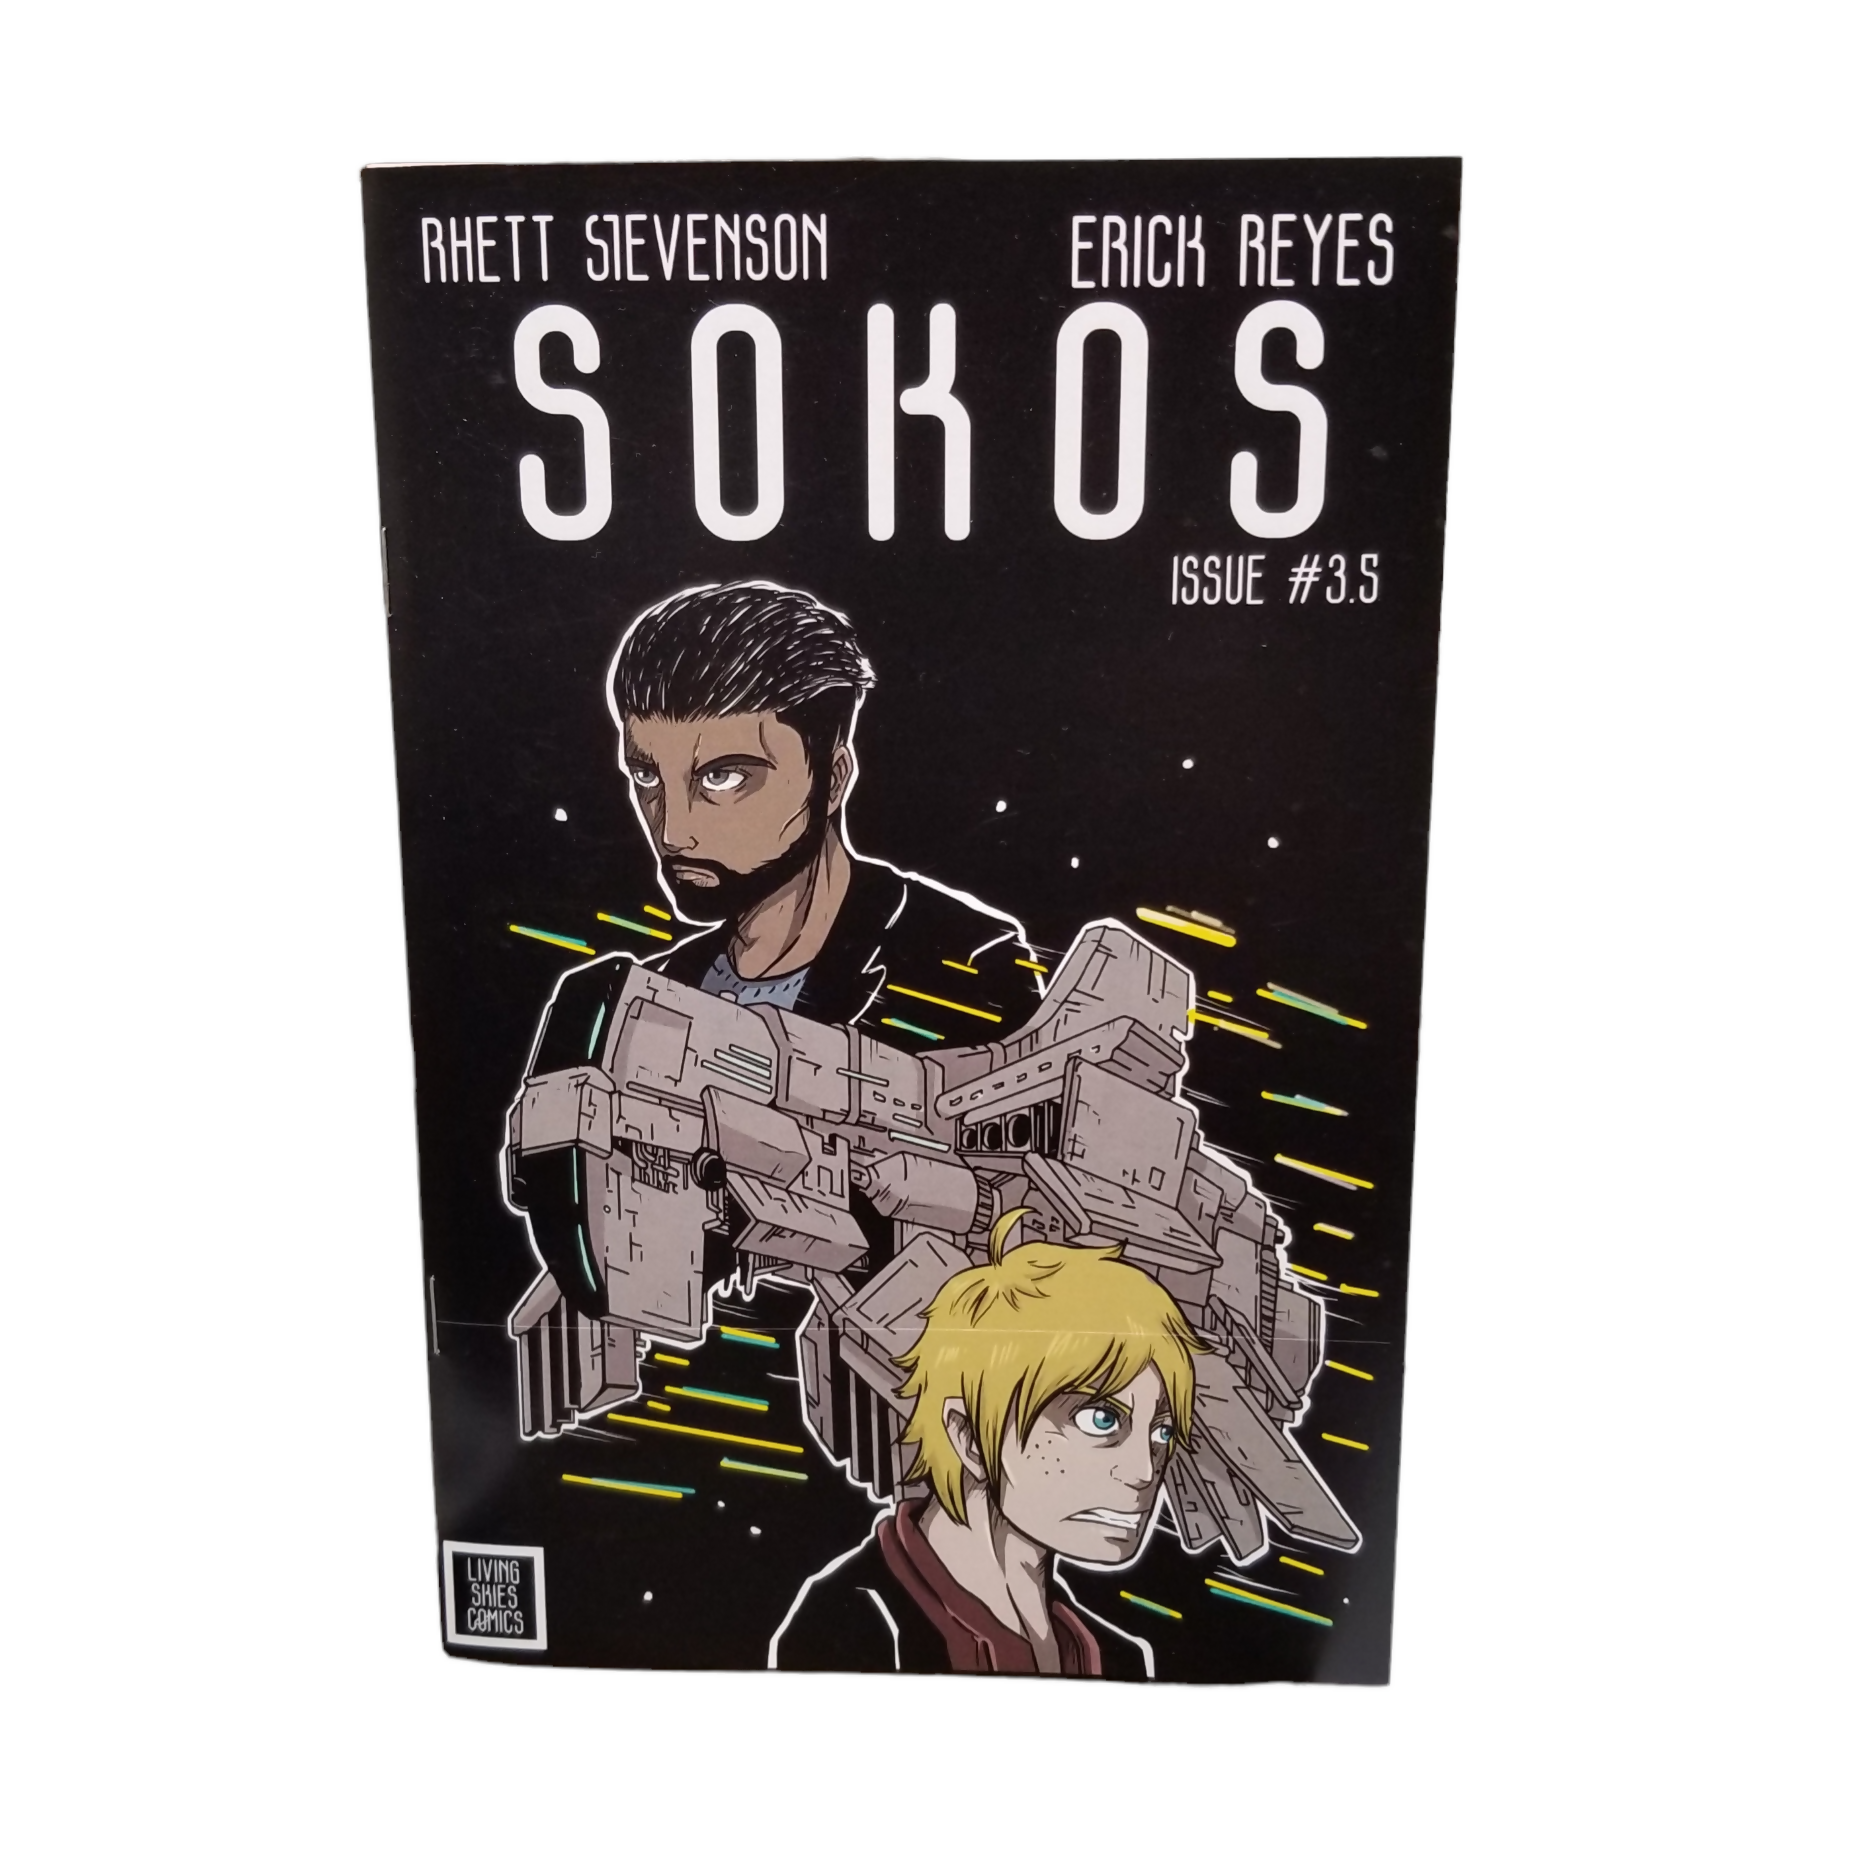 SOKOS Issue #3.5